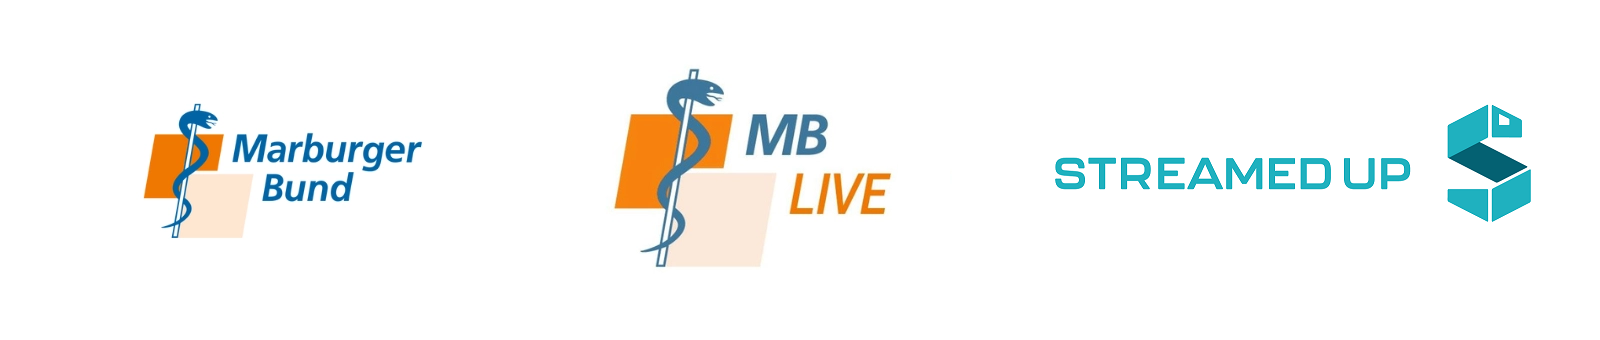 Logos MB LIVE